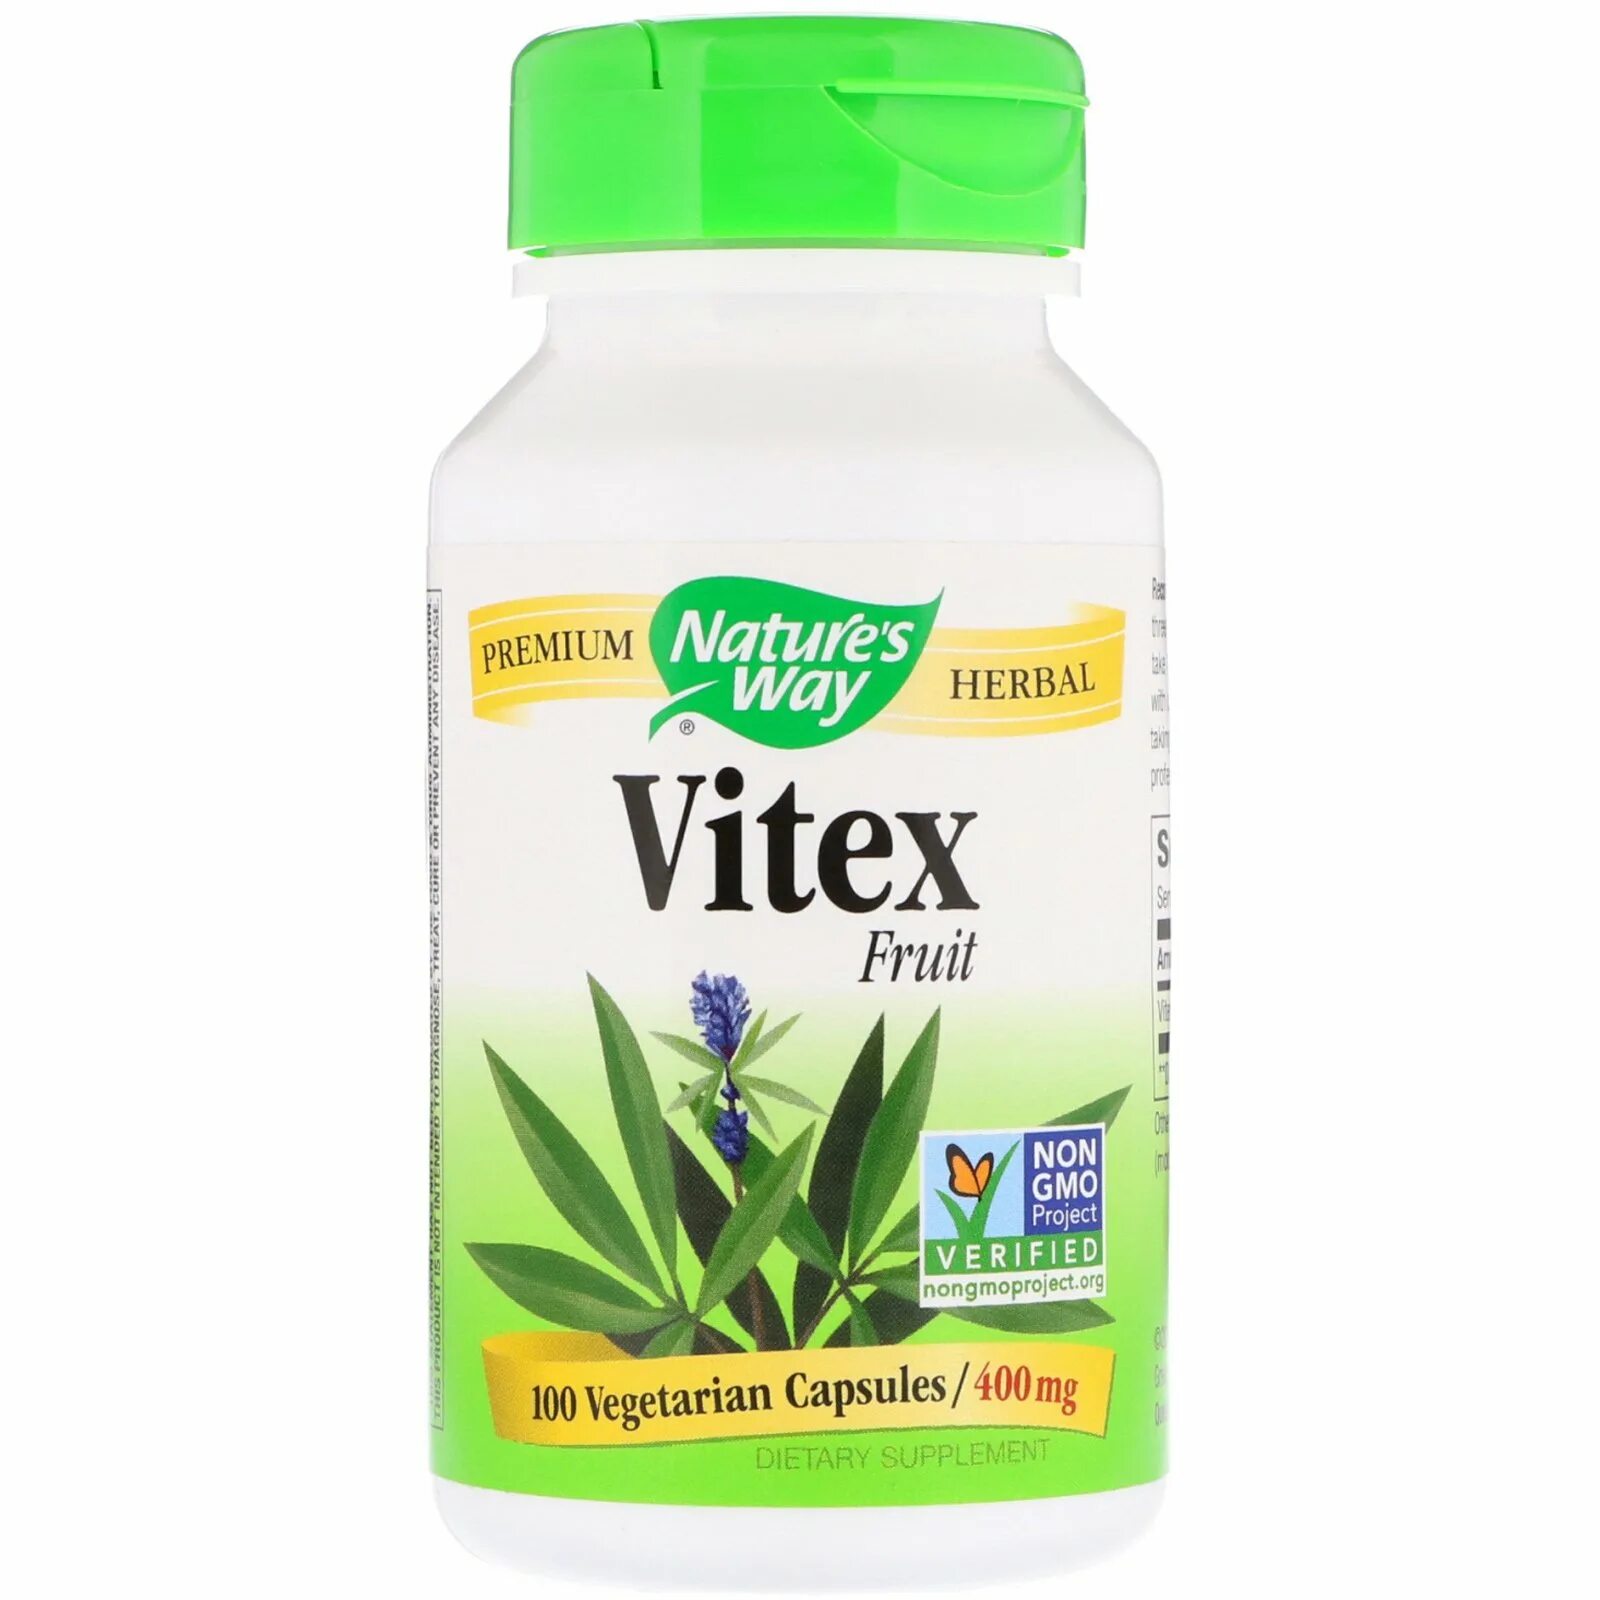 Nature's way,Vitex Fruit, 400 MG. Nature's way, плоды витекса, 400 мг. Nature's way, плоды витекса, 400 мг, 100 веганских капсул. Витекс священный nature's way. Экстракт плодов прутняка